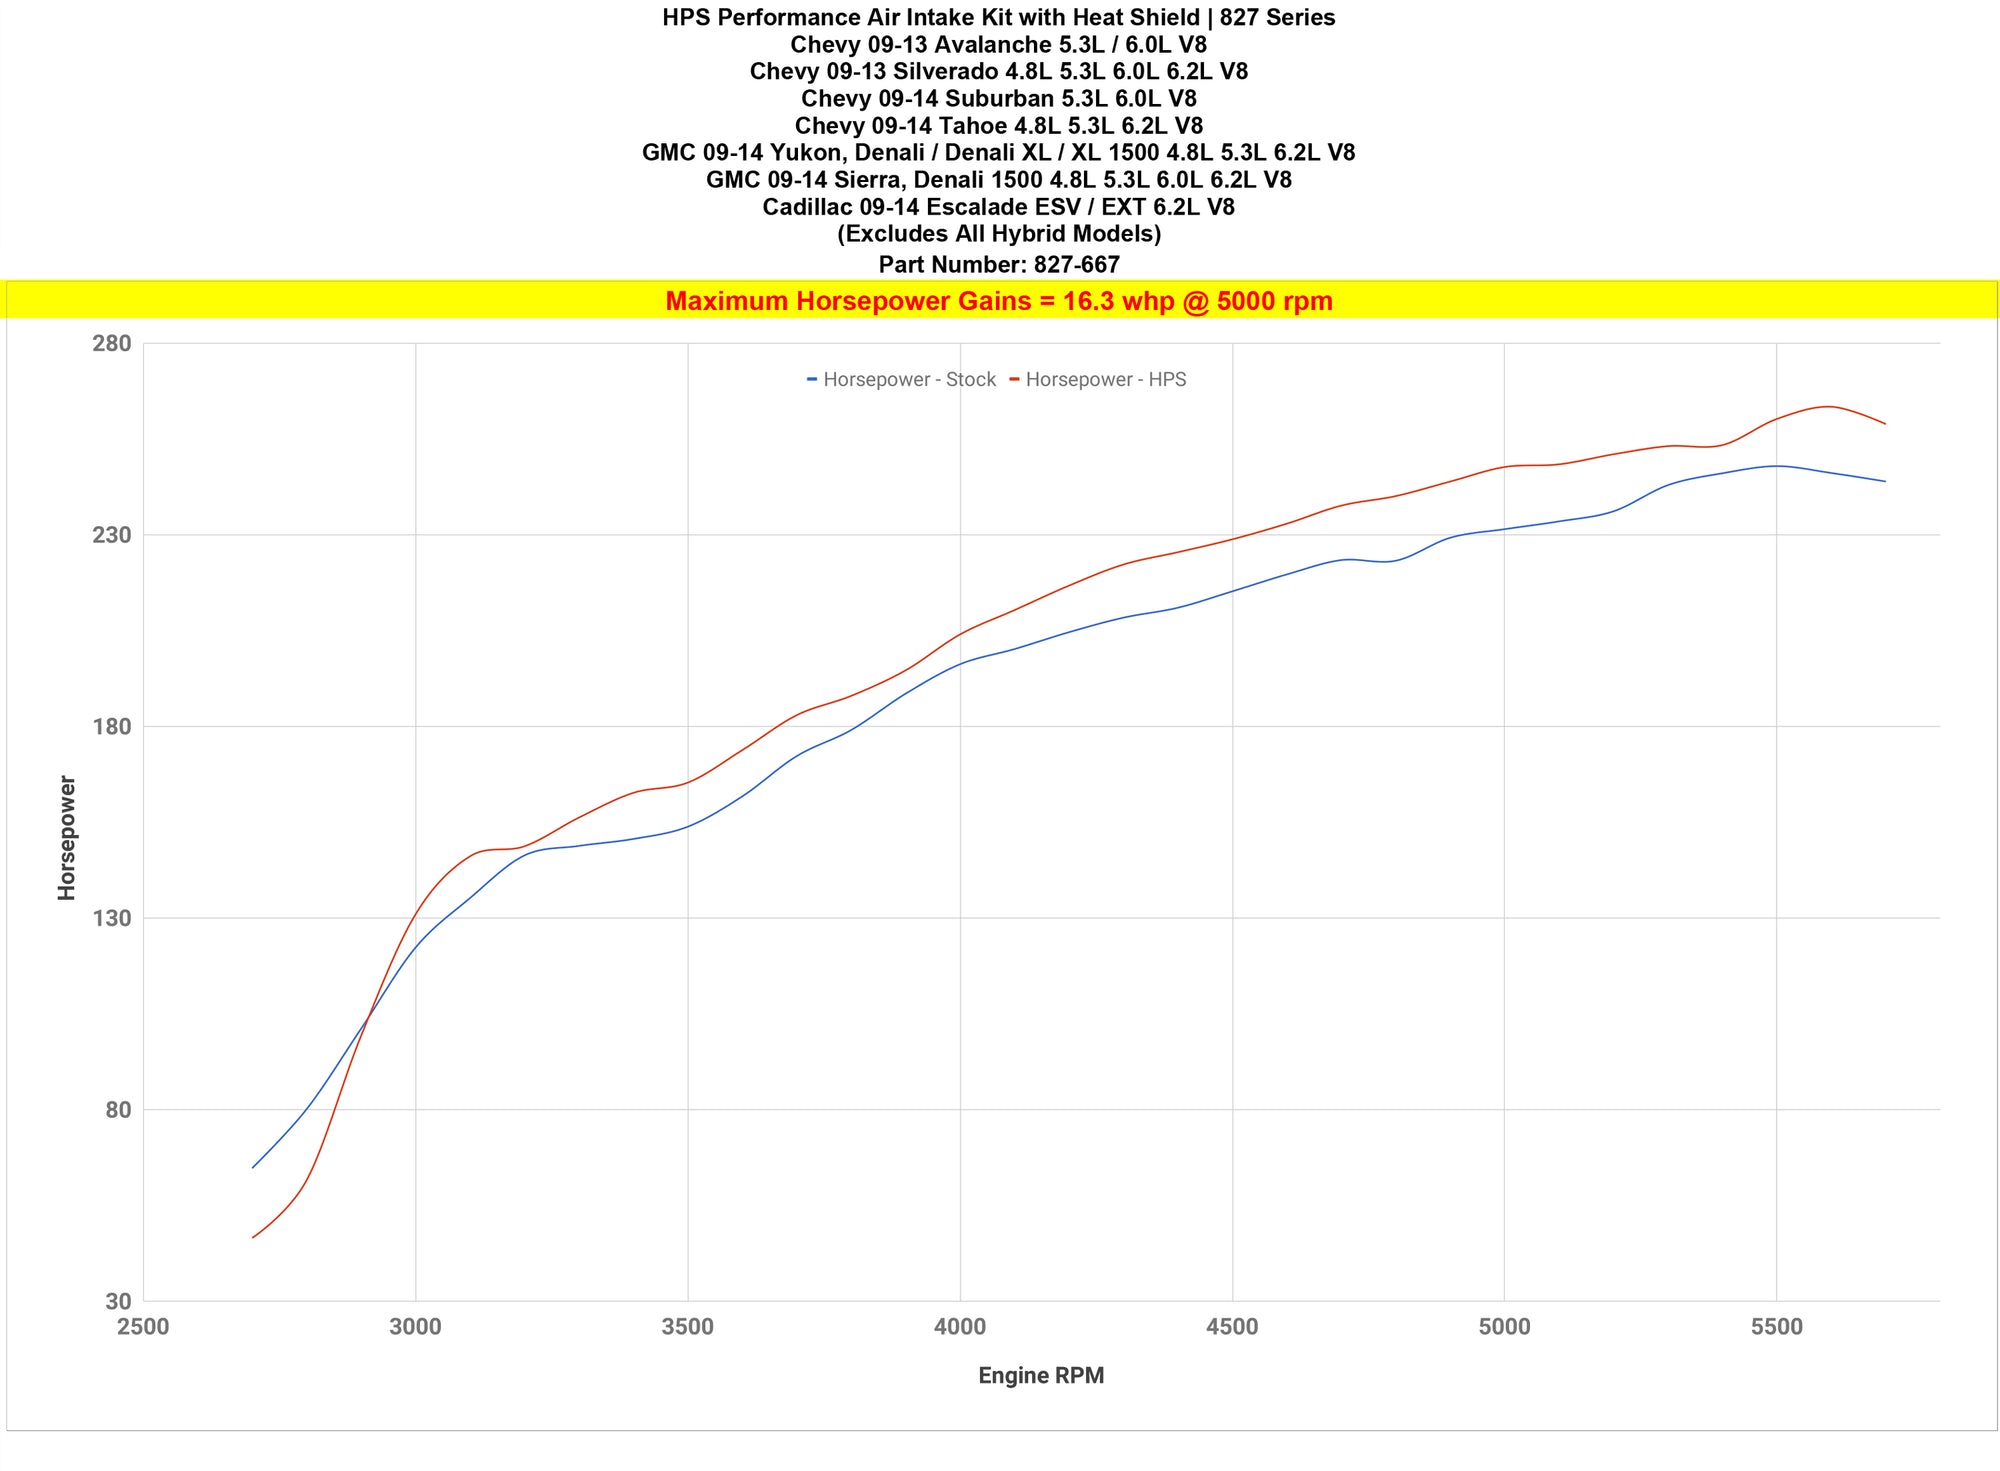 Dyno proven gains 16.3 whp HPS Performance Shortram Air Intake Kit 2009-2014 Chevy Suburban 5.3L V8 827-667BL